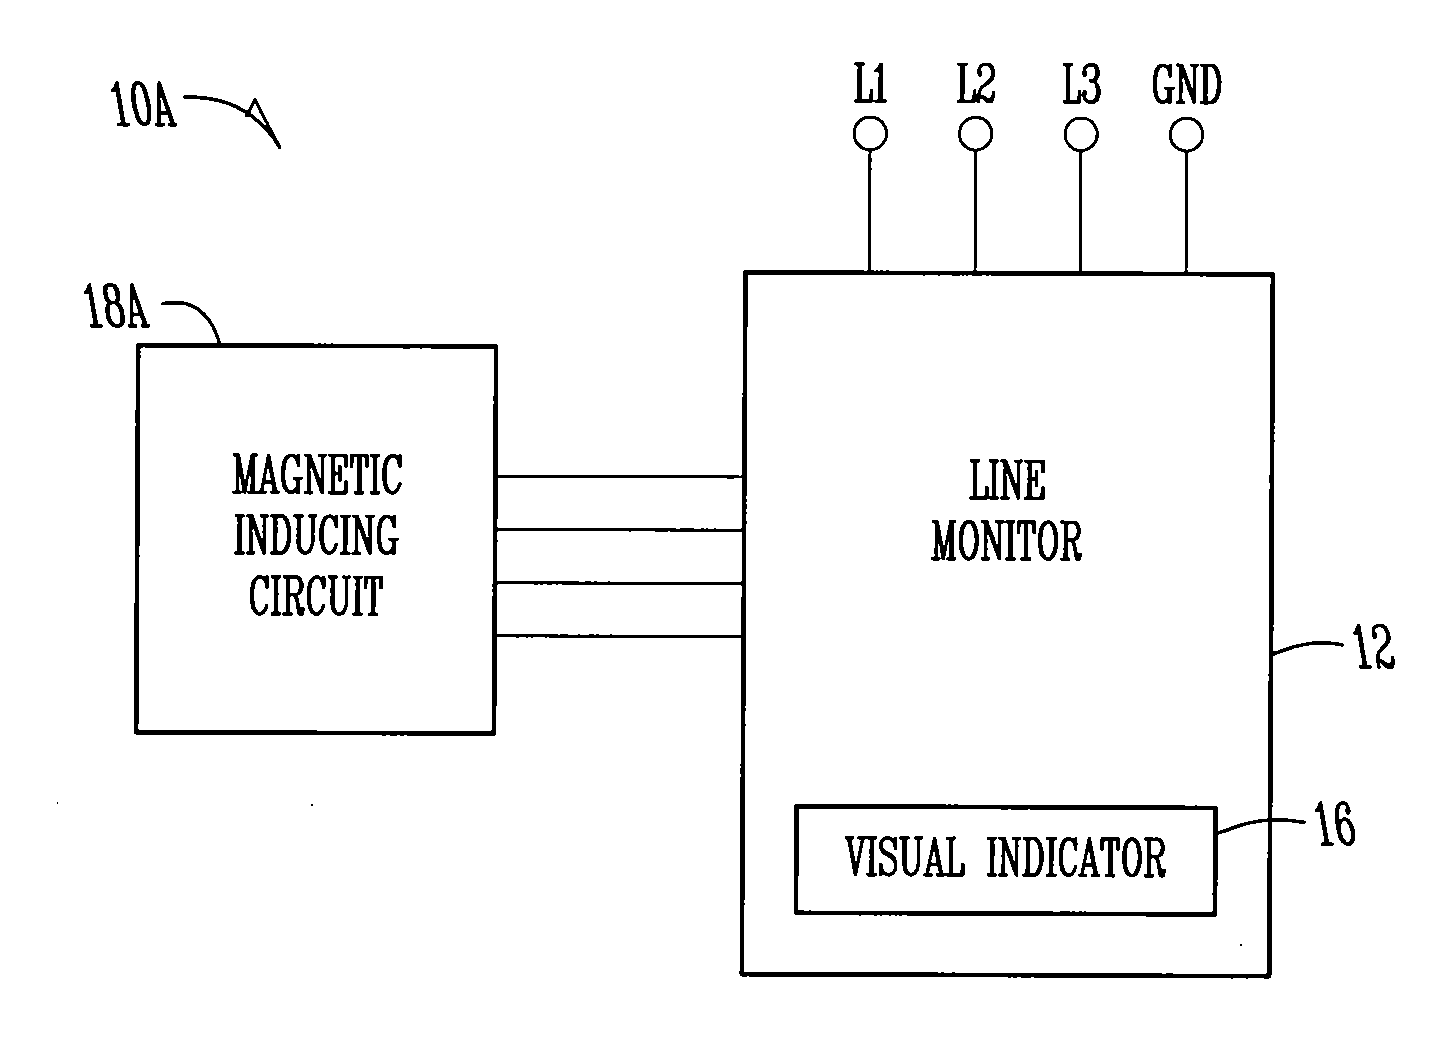 Voltage indicator test mechanism